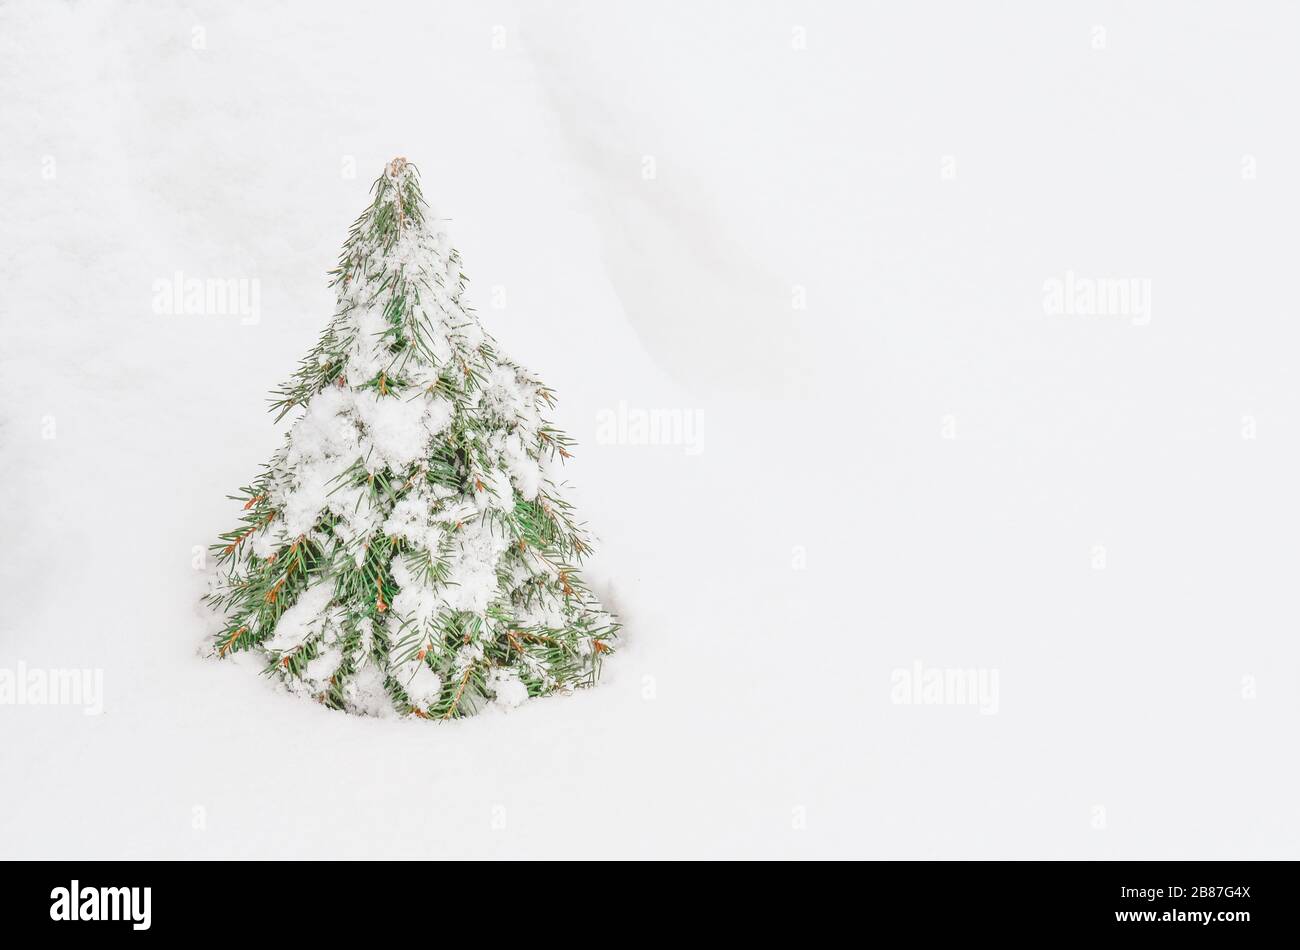 Make a cone Christmas tree based on warp a cardboard or styrofoam cone. Creative Christmas tree ideas. The base of the styrofoam cone will be cover fi Stock Photo